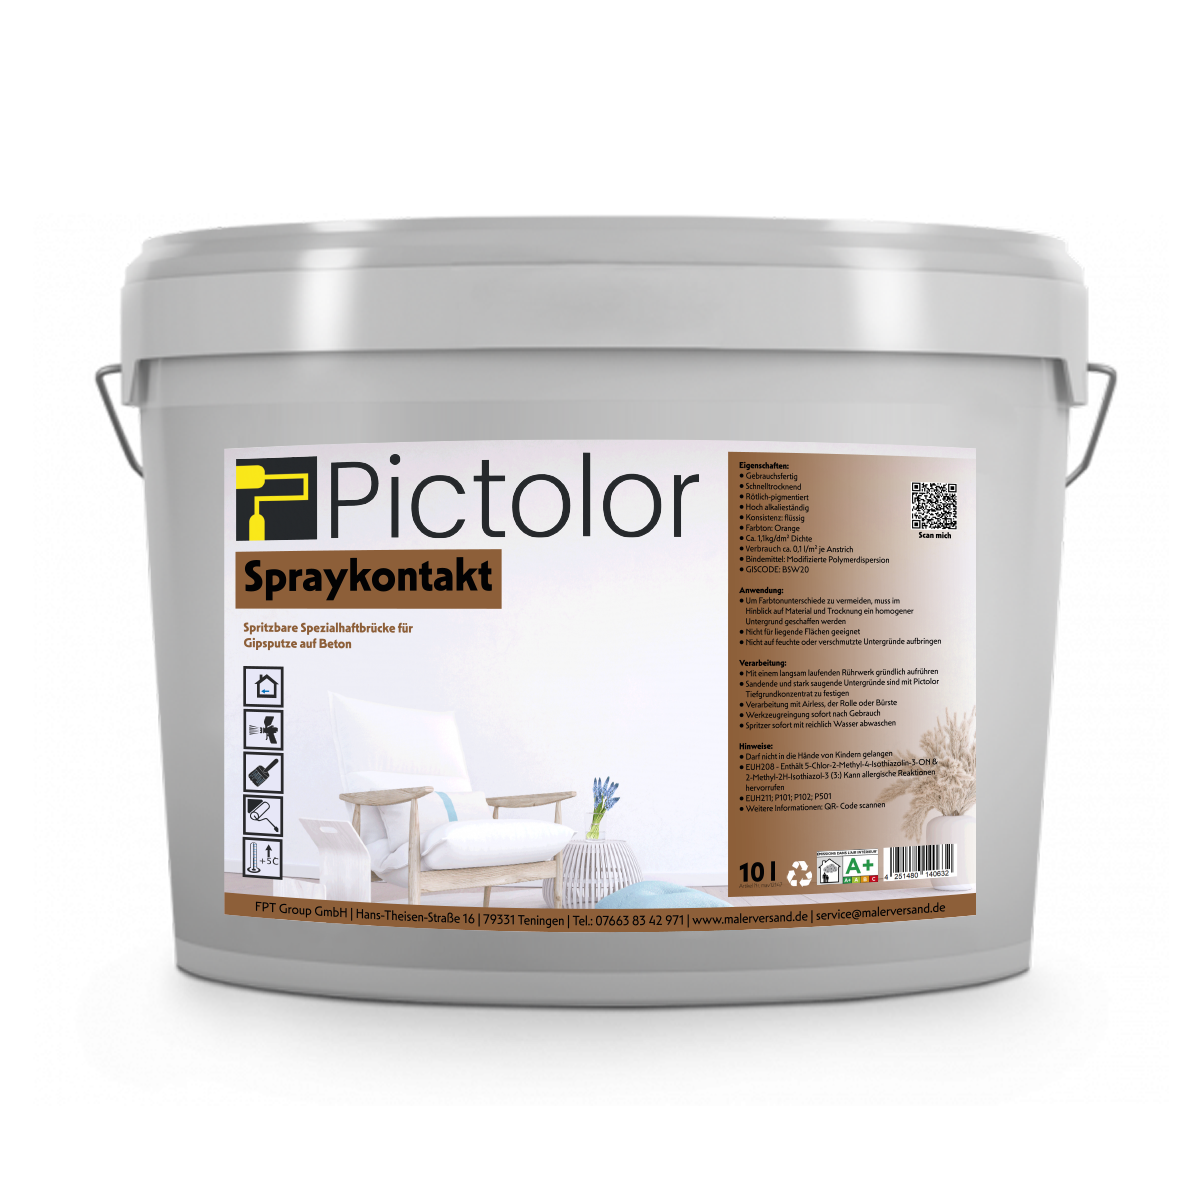 Pictolor® Easy Spraykontakt von Pictolor®